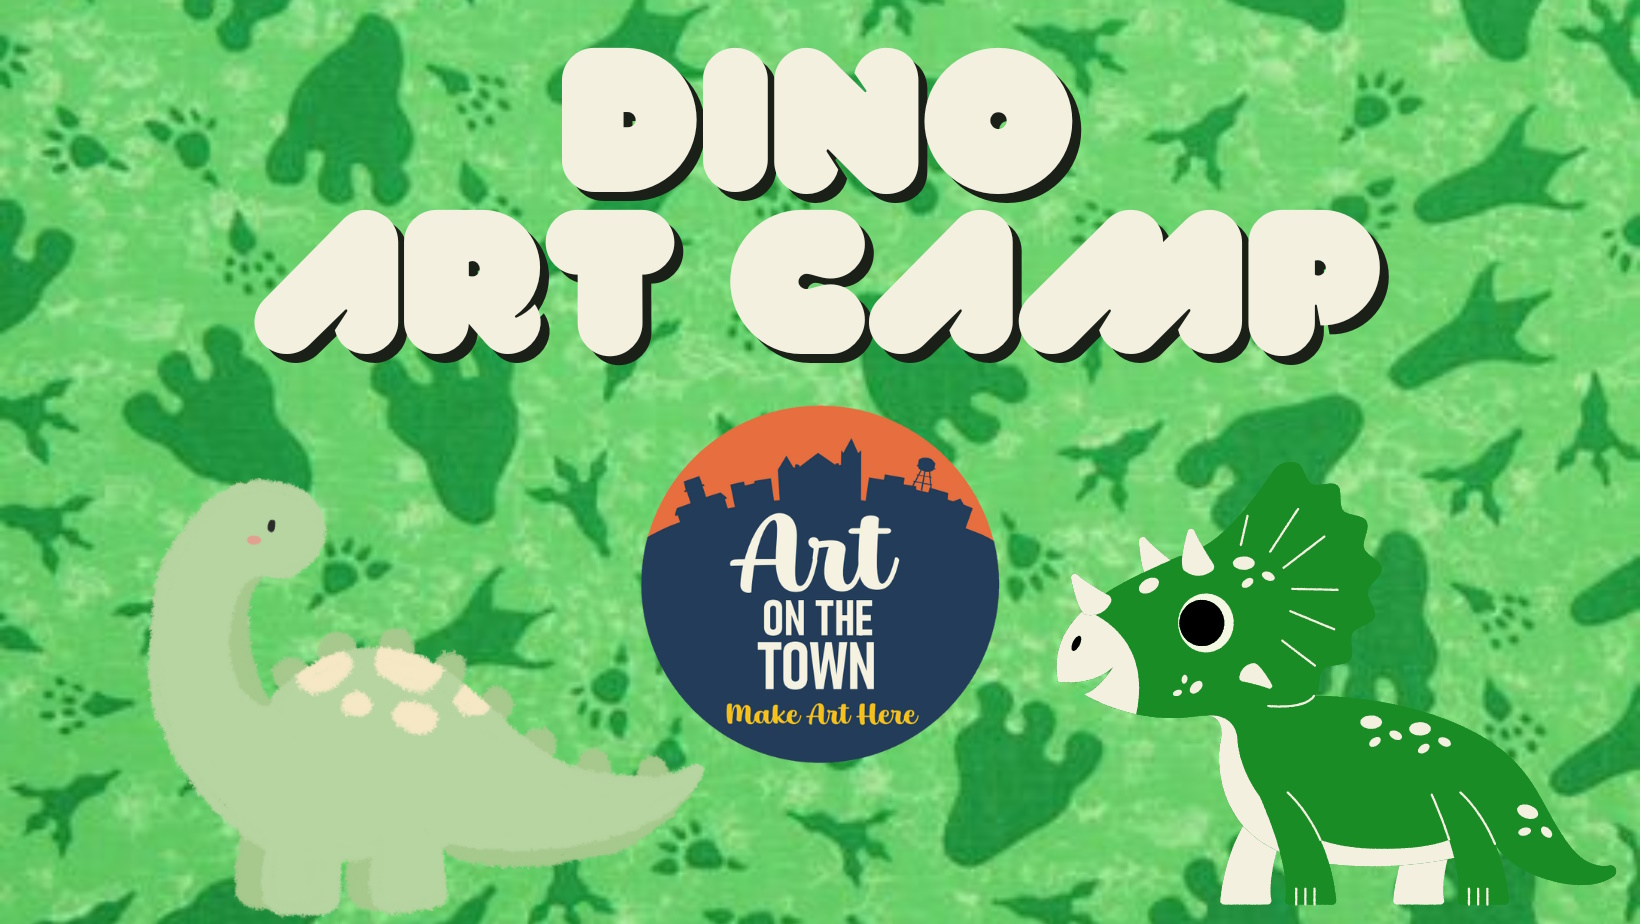 Dino Art Camp